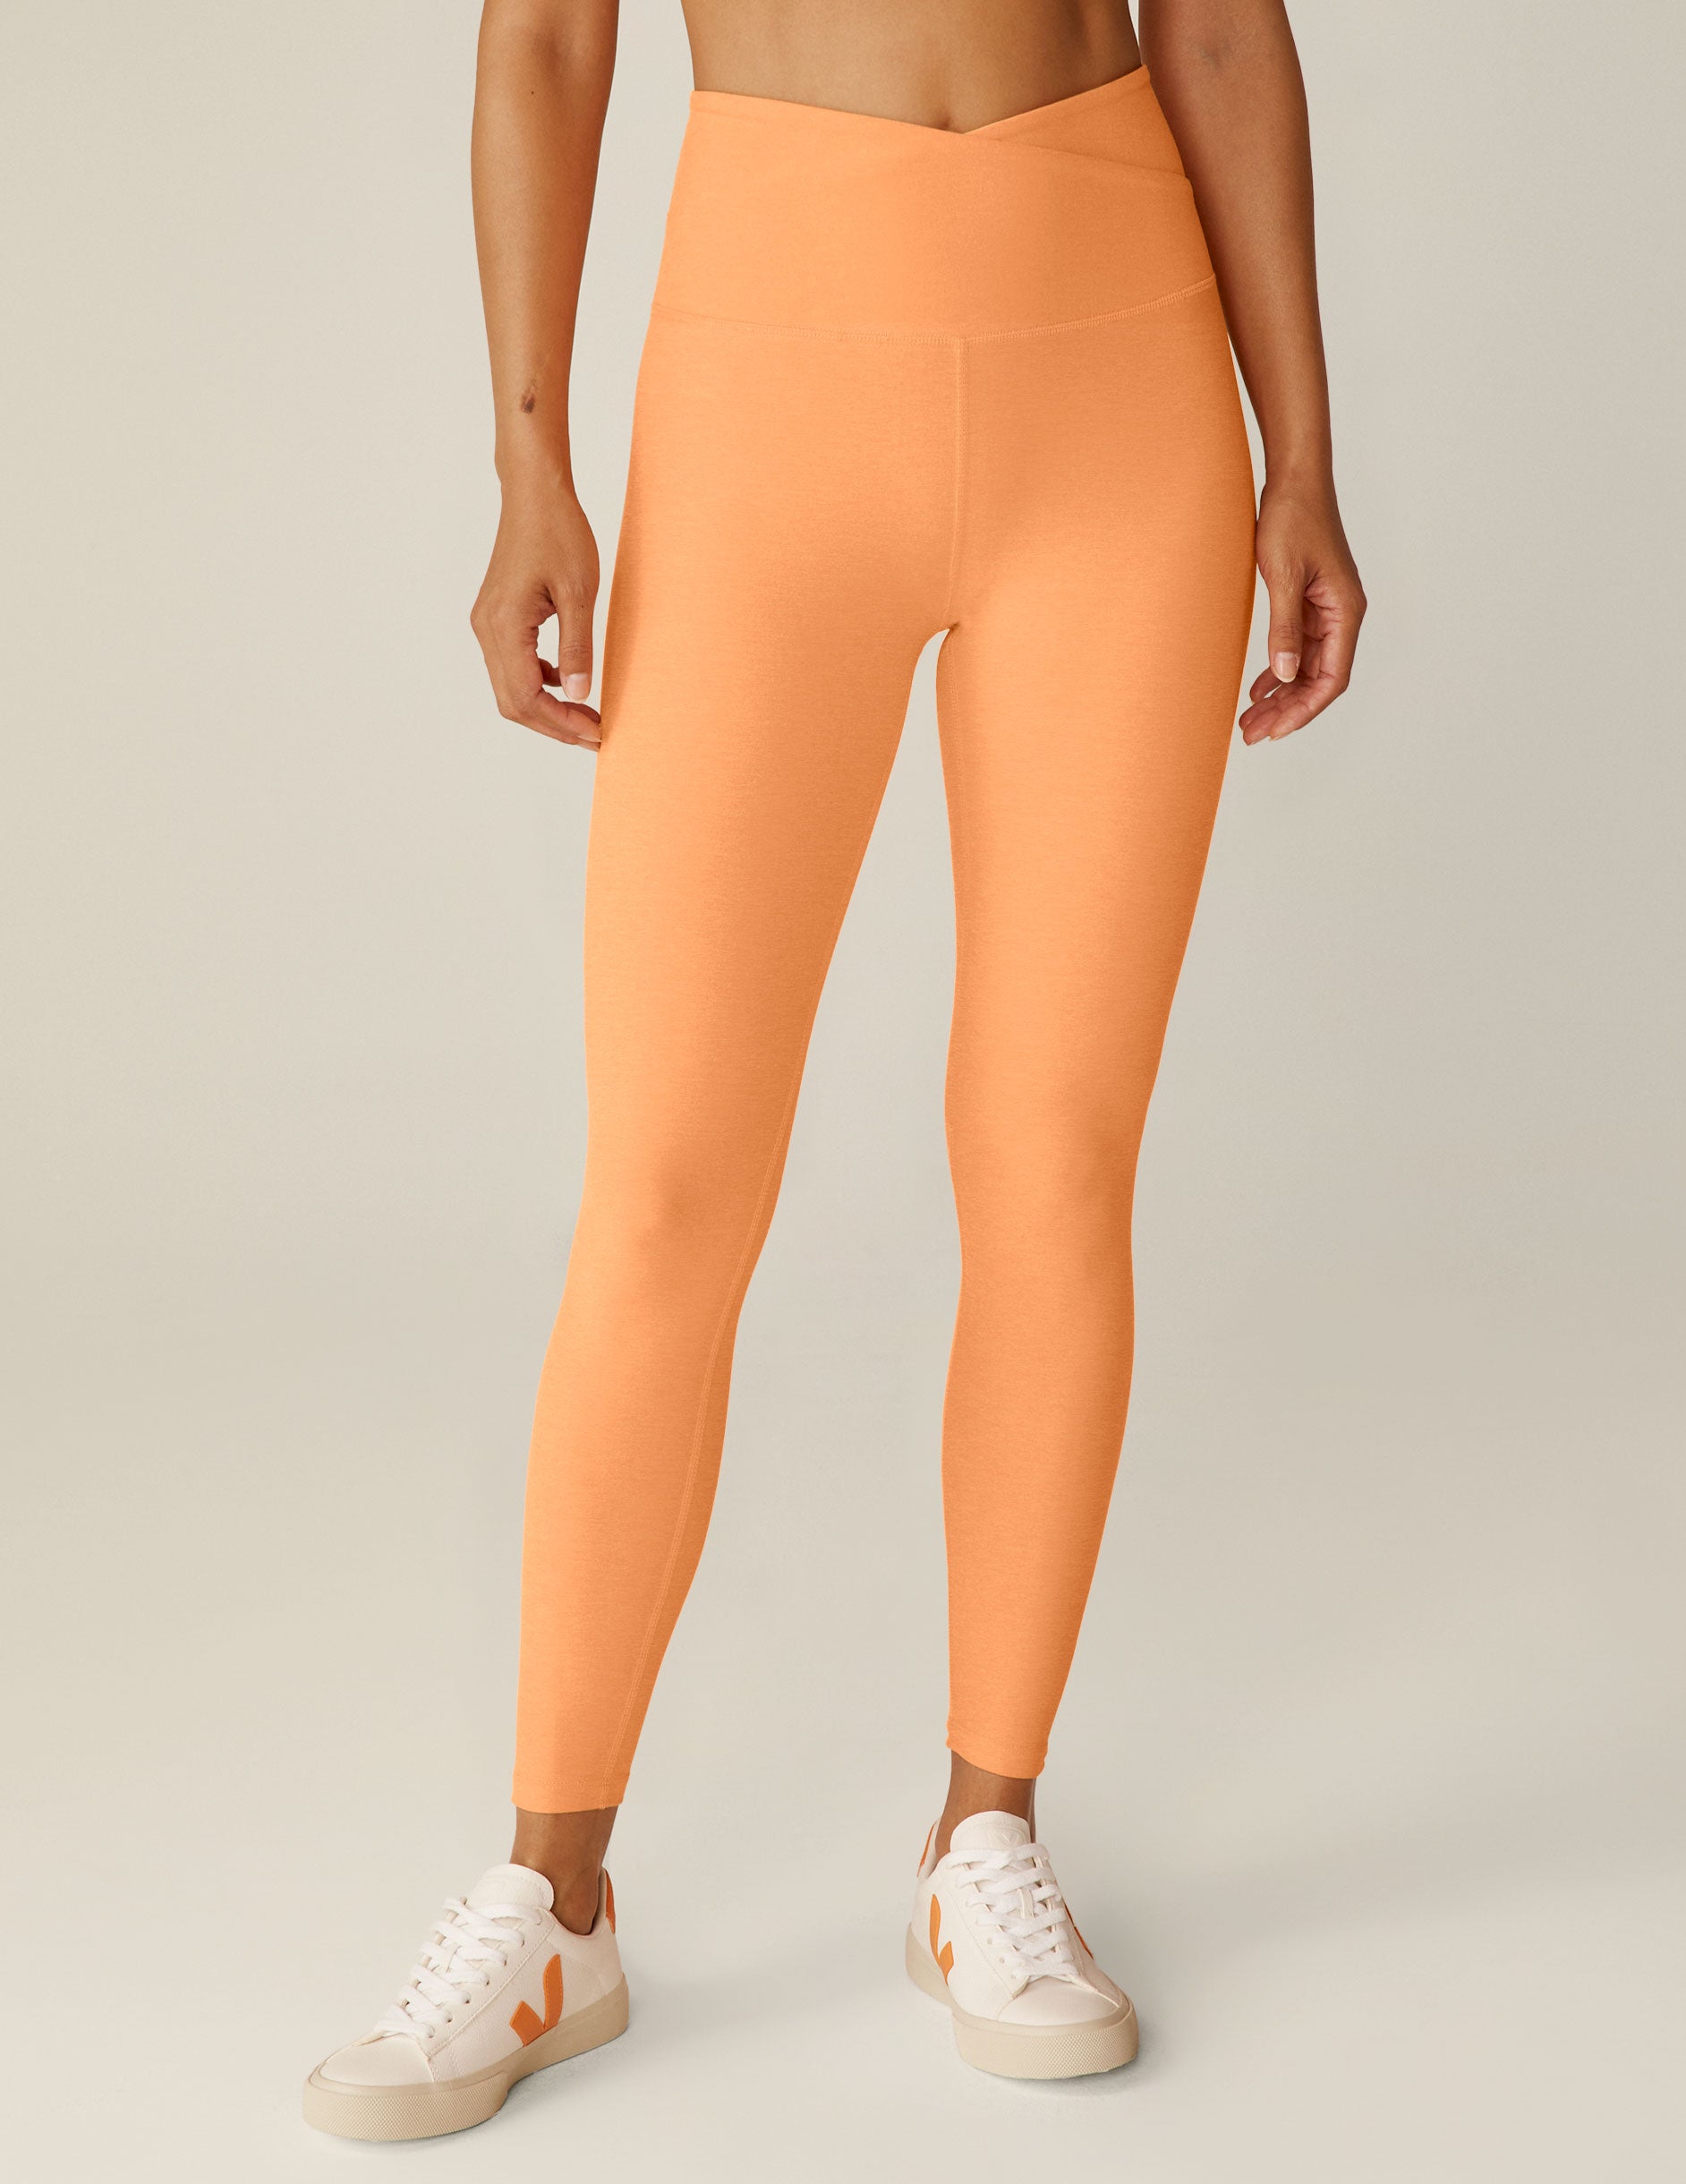 WOO YOGA  Sophia HIGH-WAIST Yoga Legging - Fluorescent Orange